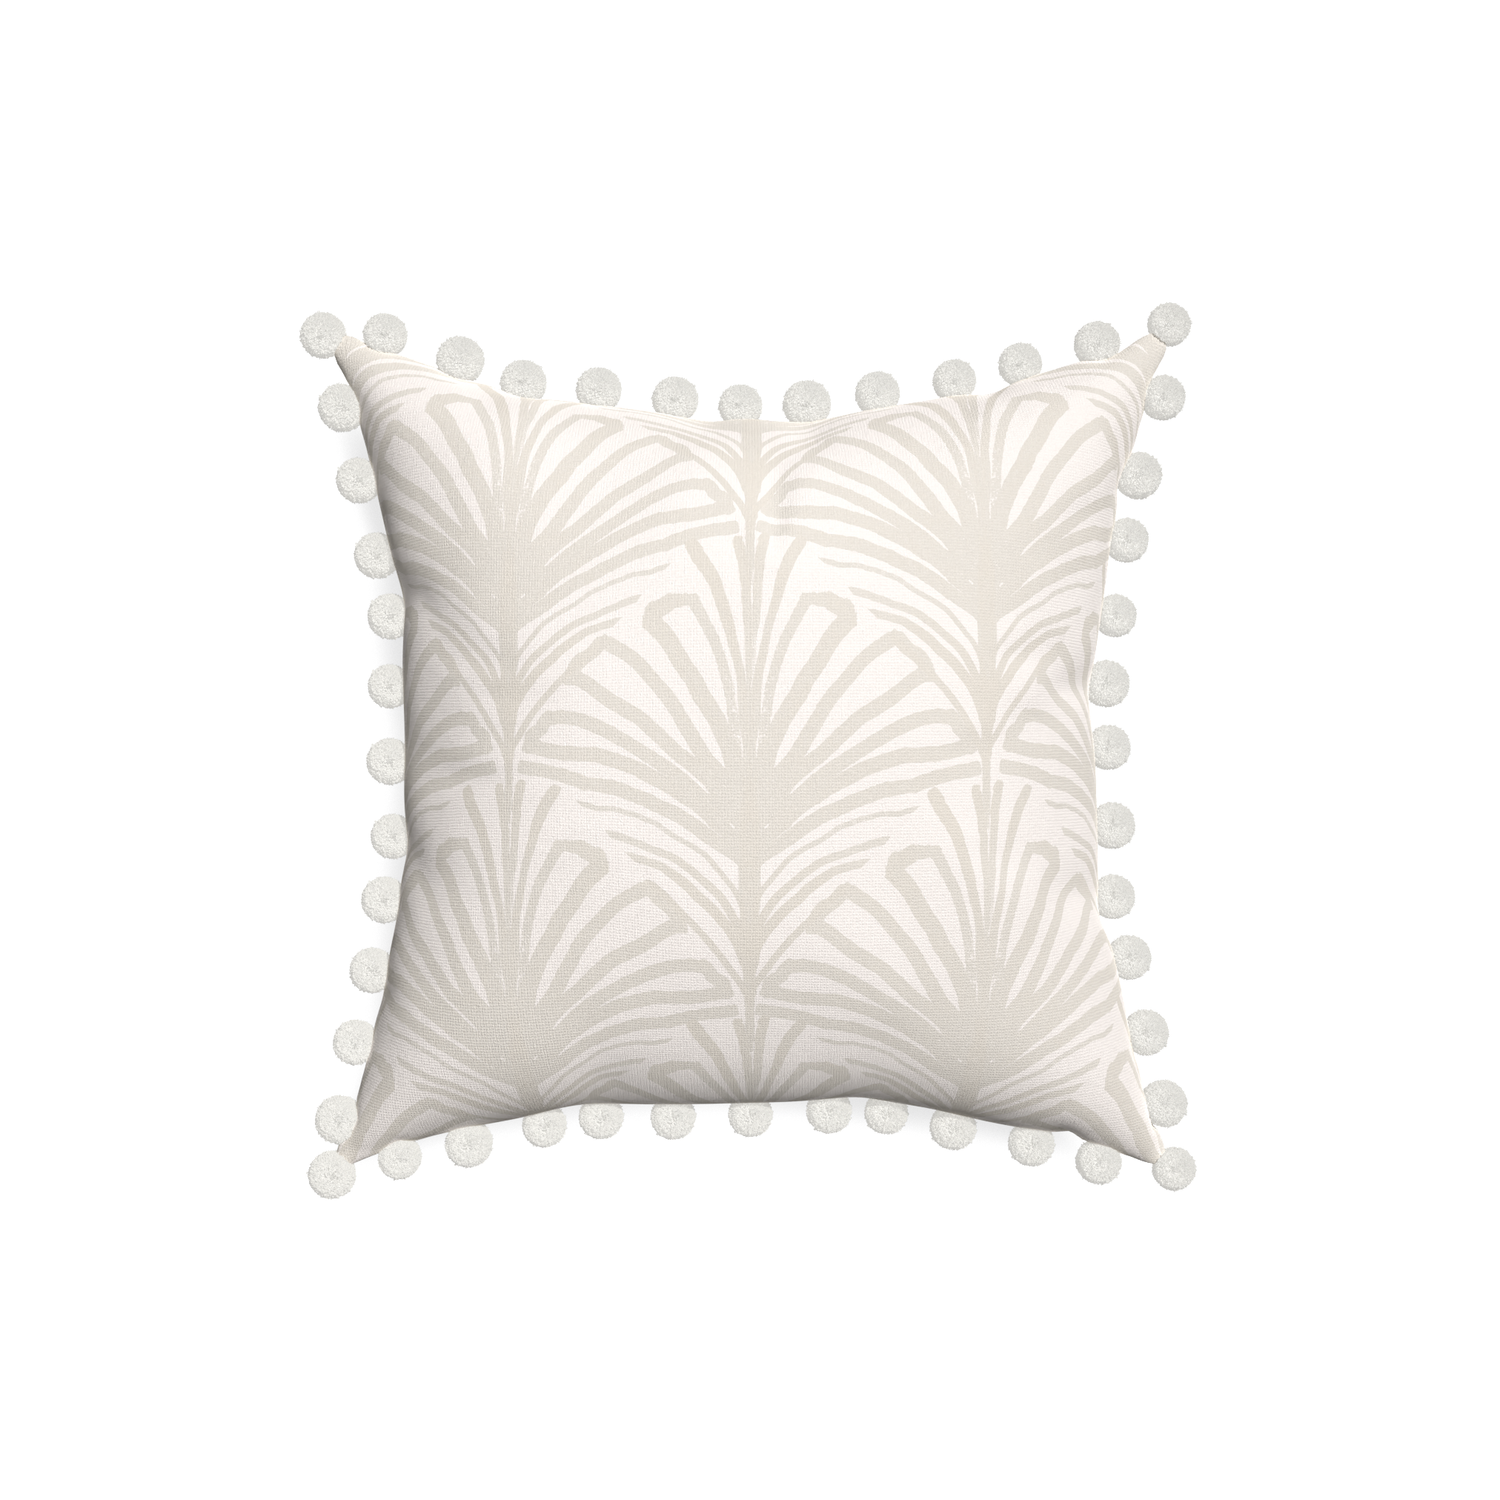 18-square suzy sand custom pillow with snow pom pom on white background